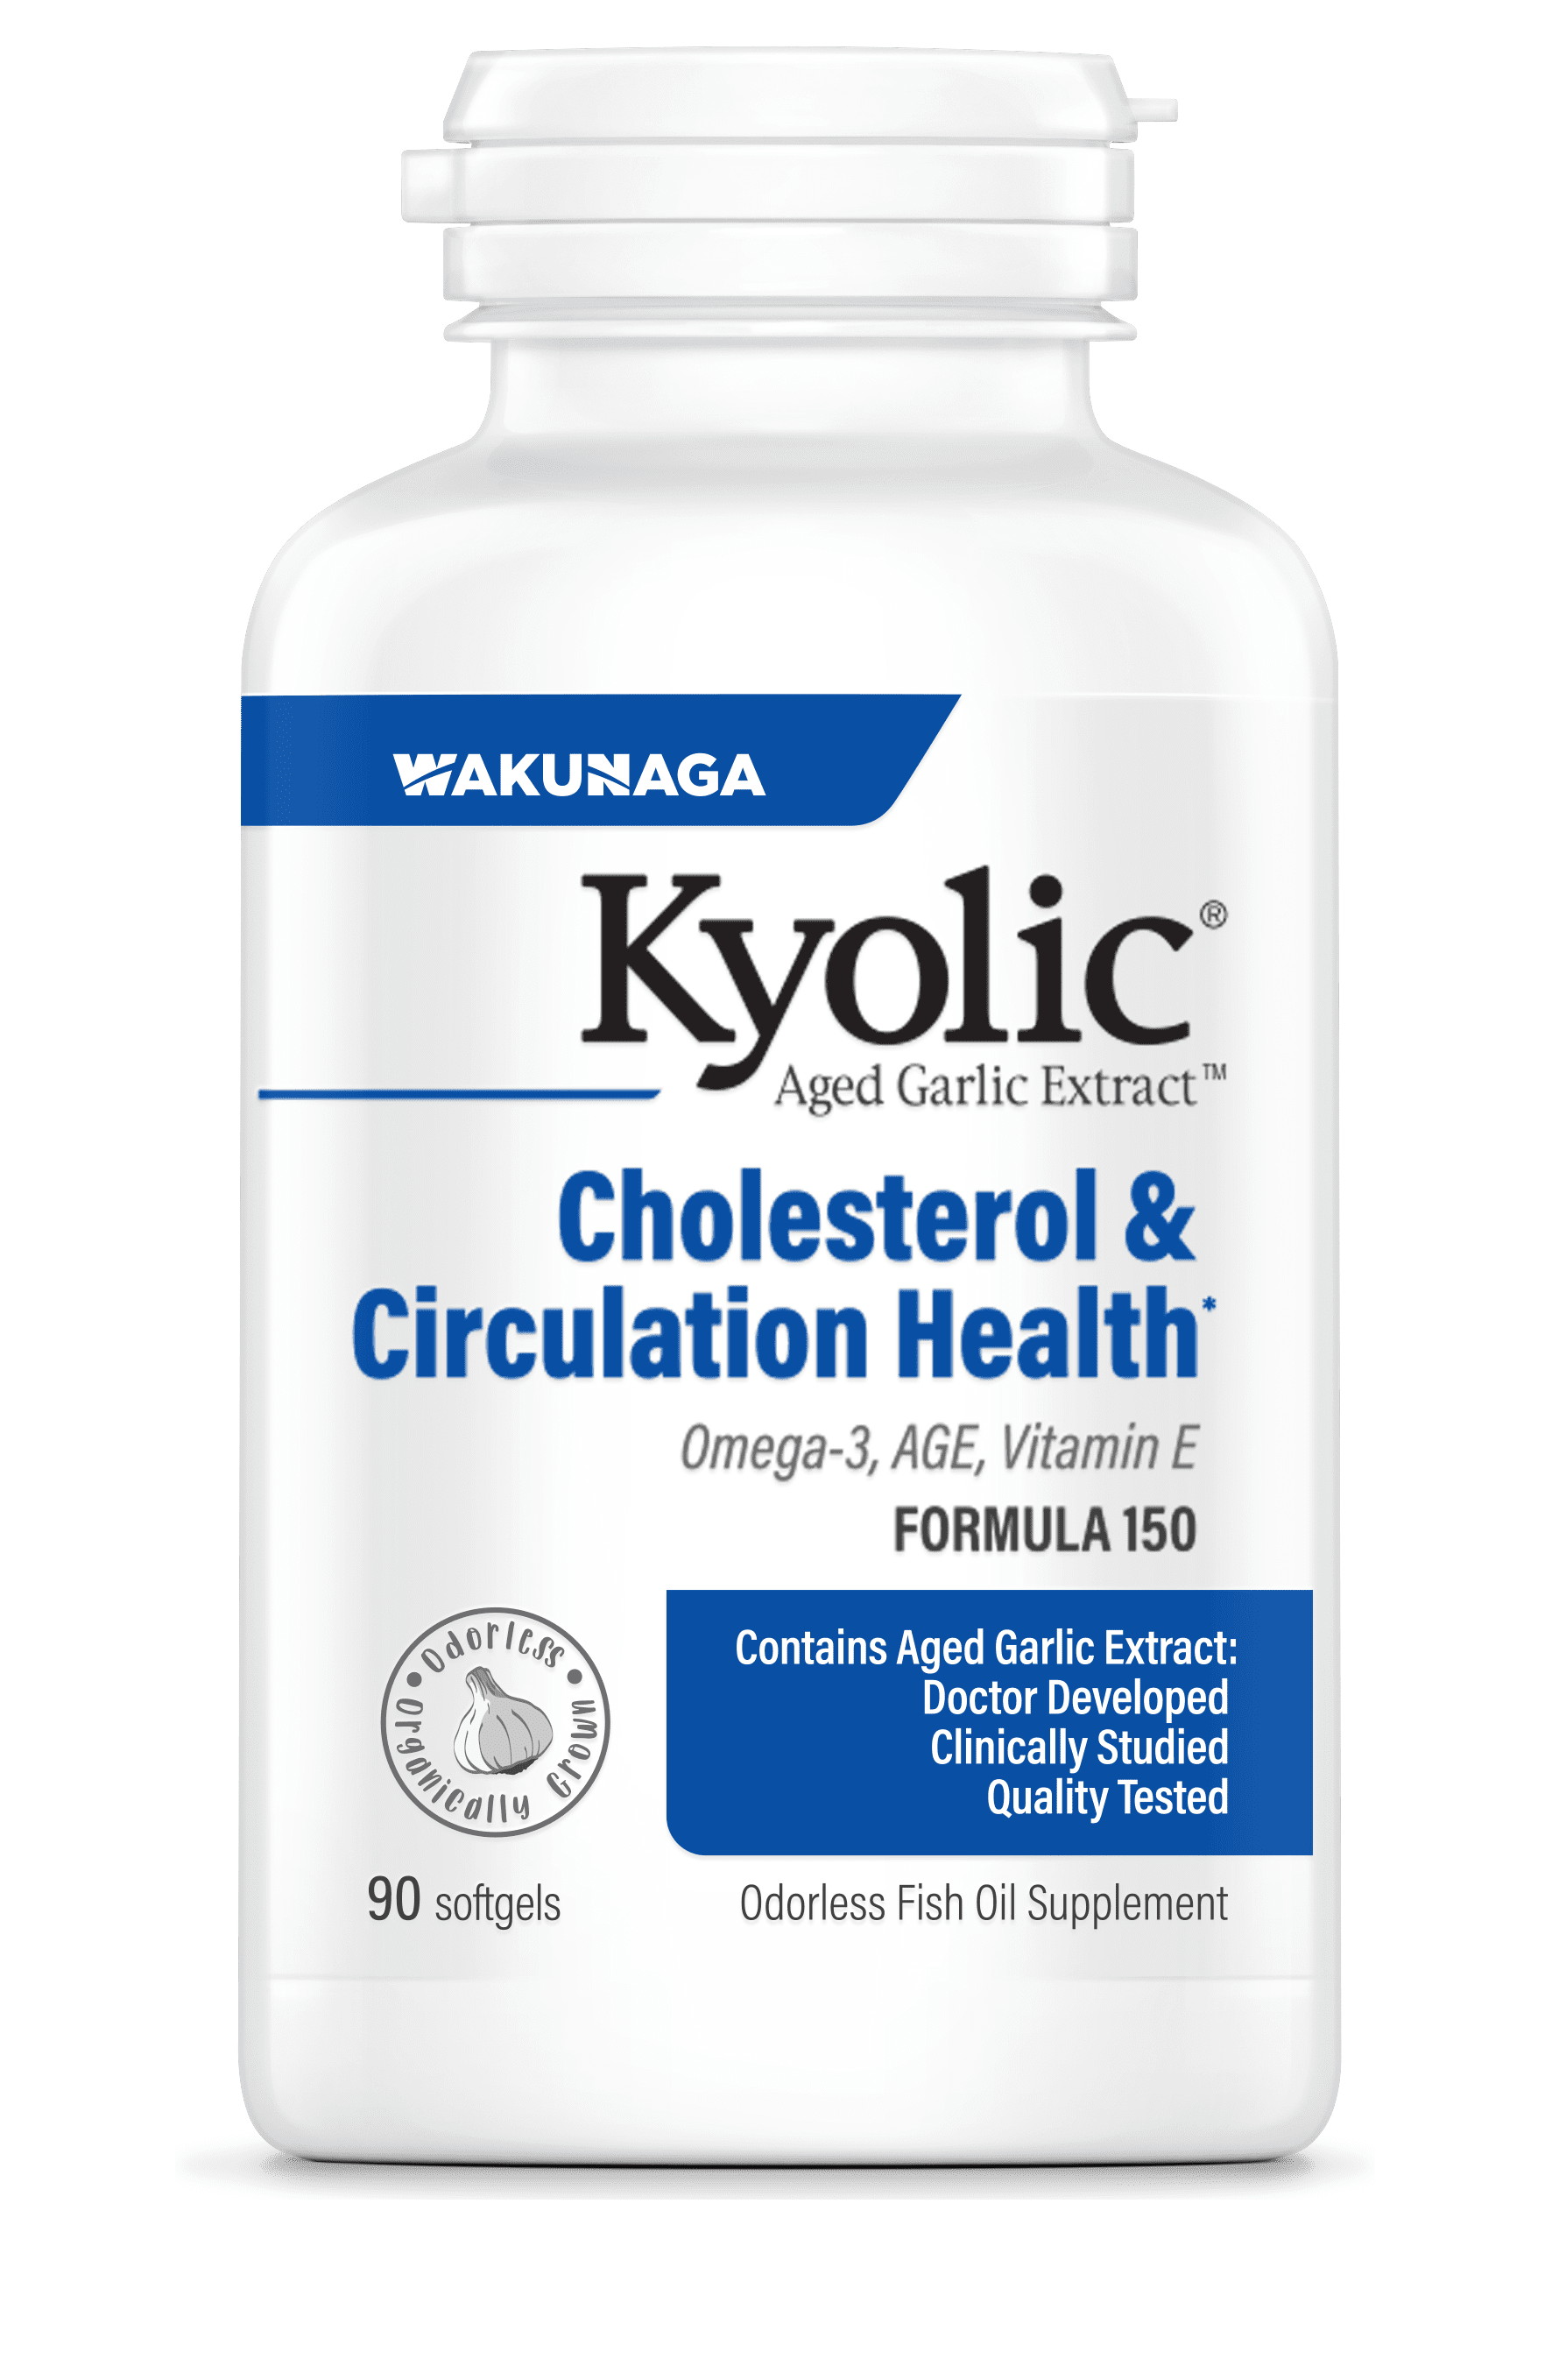 Kyolic® AGE Cholesterol & Circulation Health